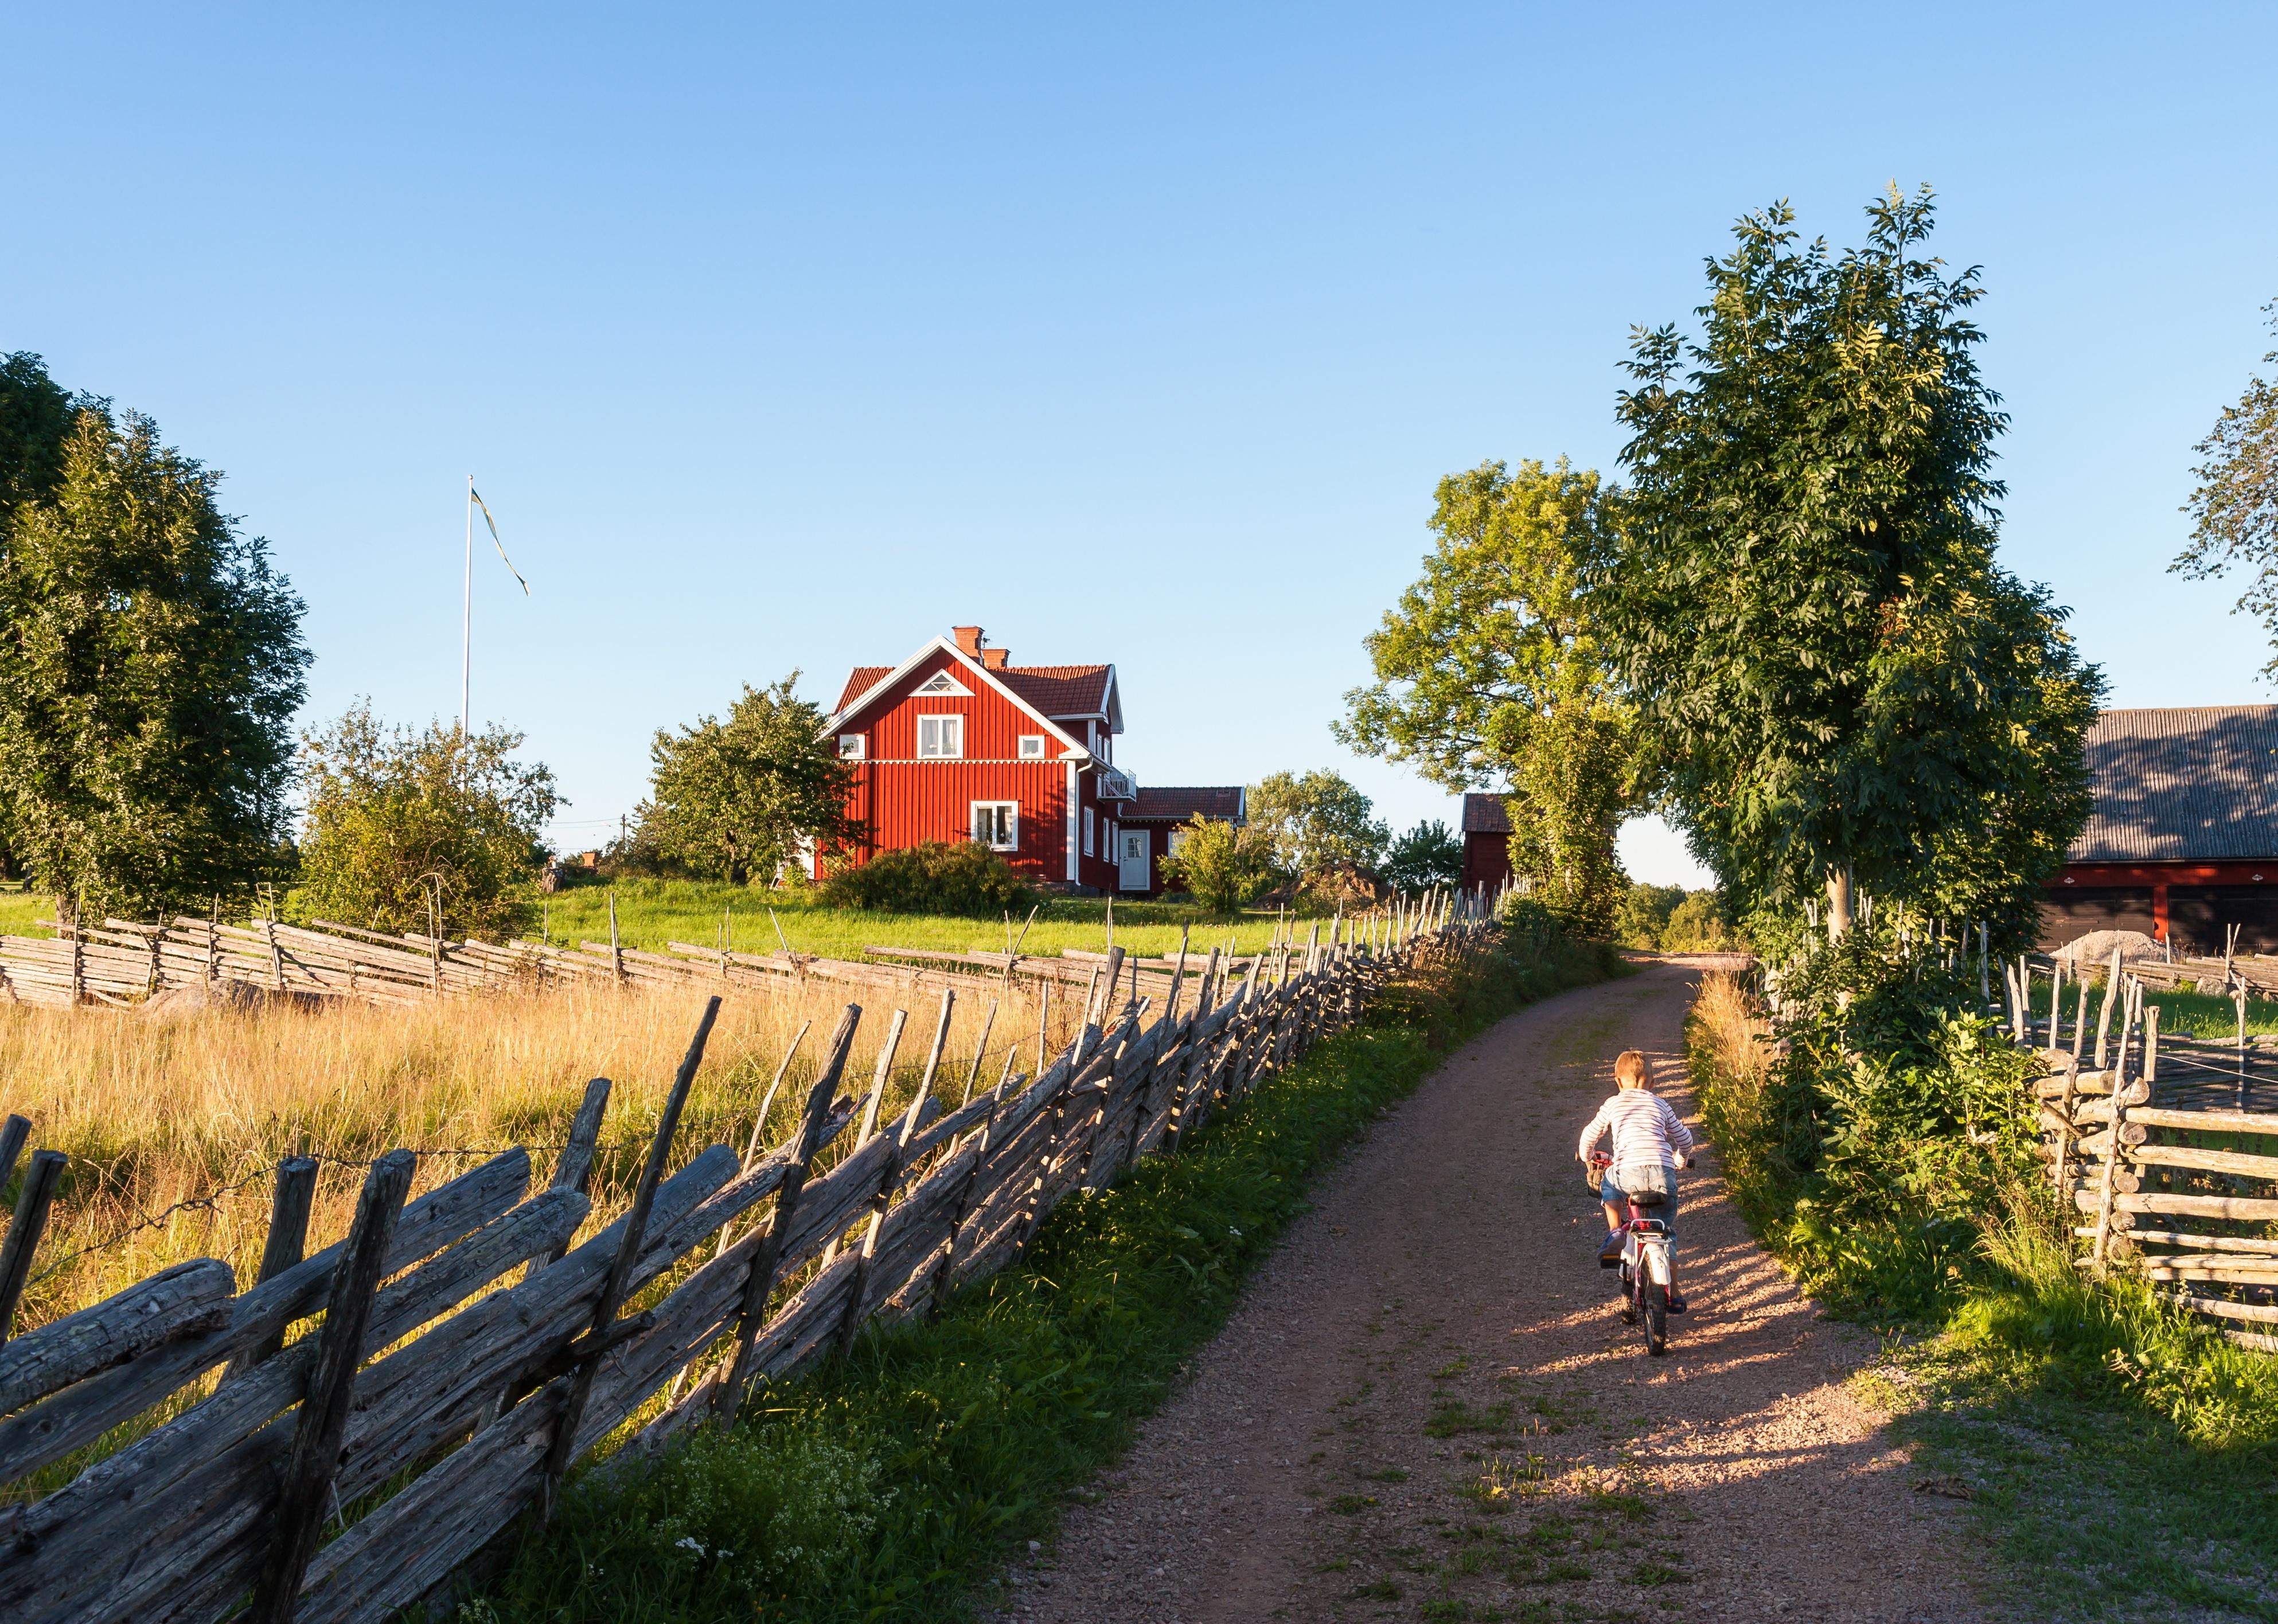 Child riding a bicycle along a small farm lane.